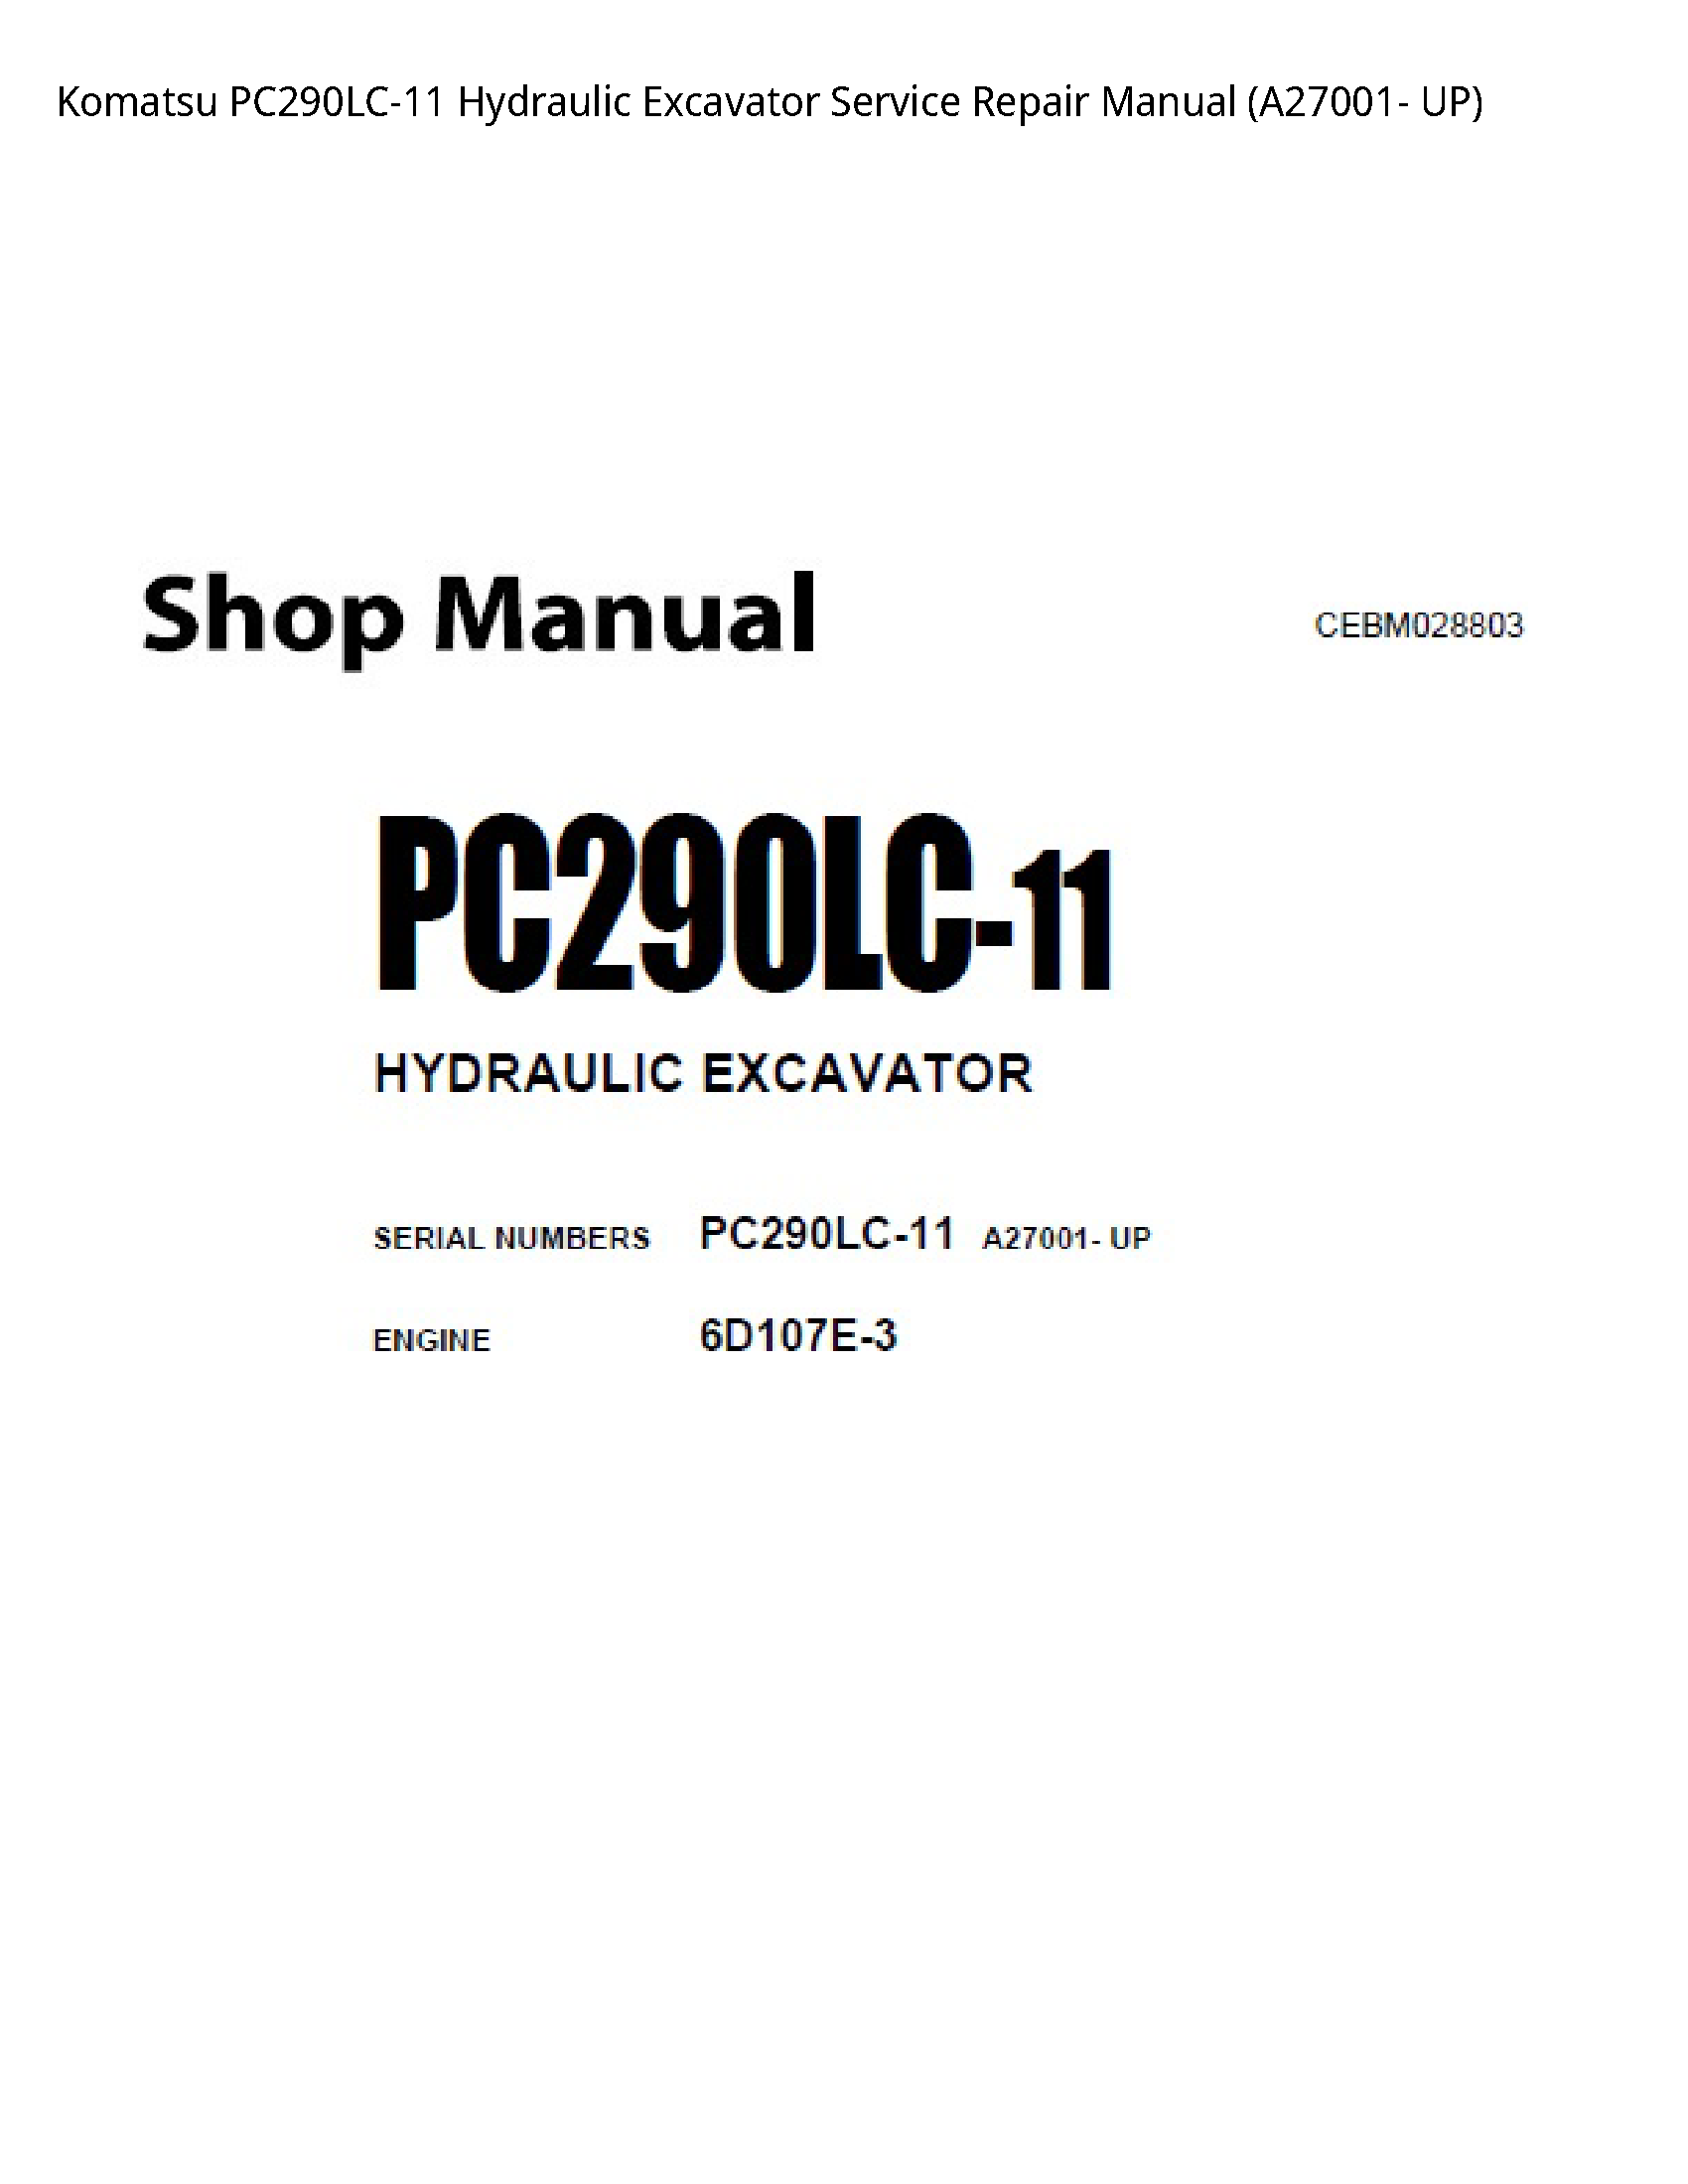 KOMATSU PC290LC-11 Hydraulic Excavator manual